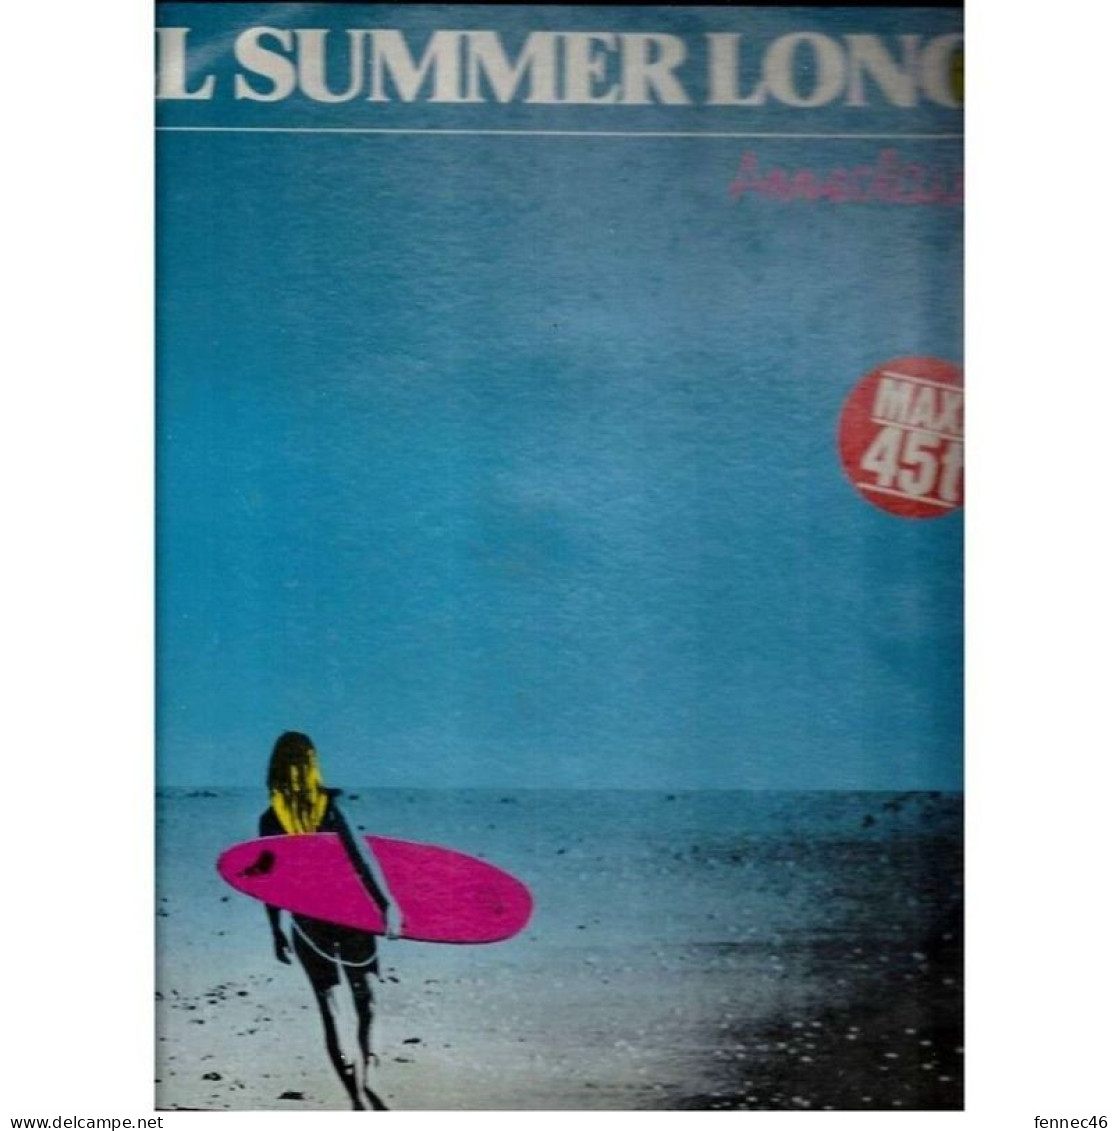 Vinyle Maxi 45T - Anne Claire All Summer Long - 45 T - Maxi-Single